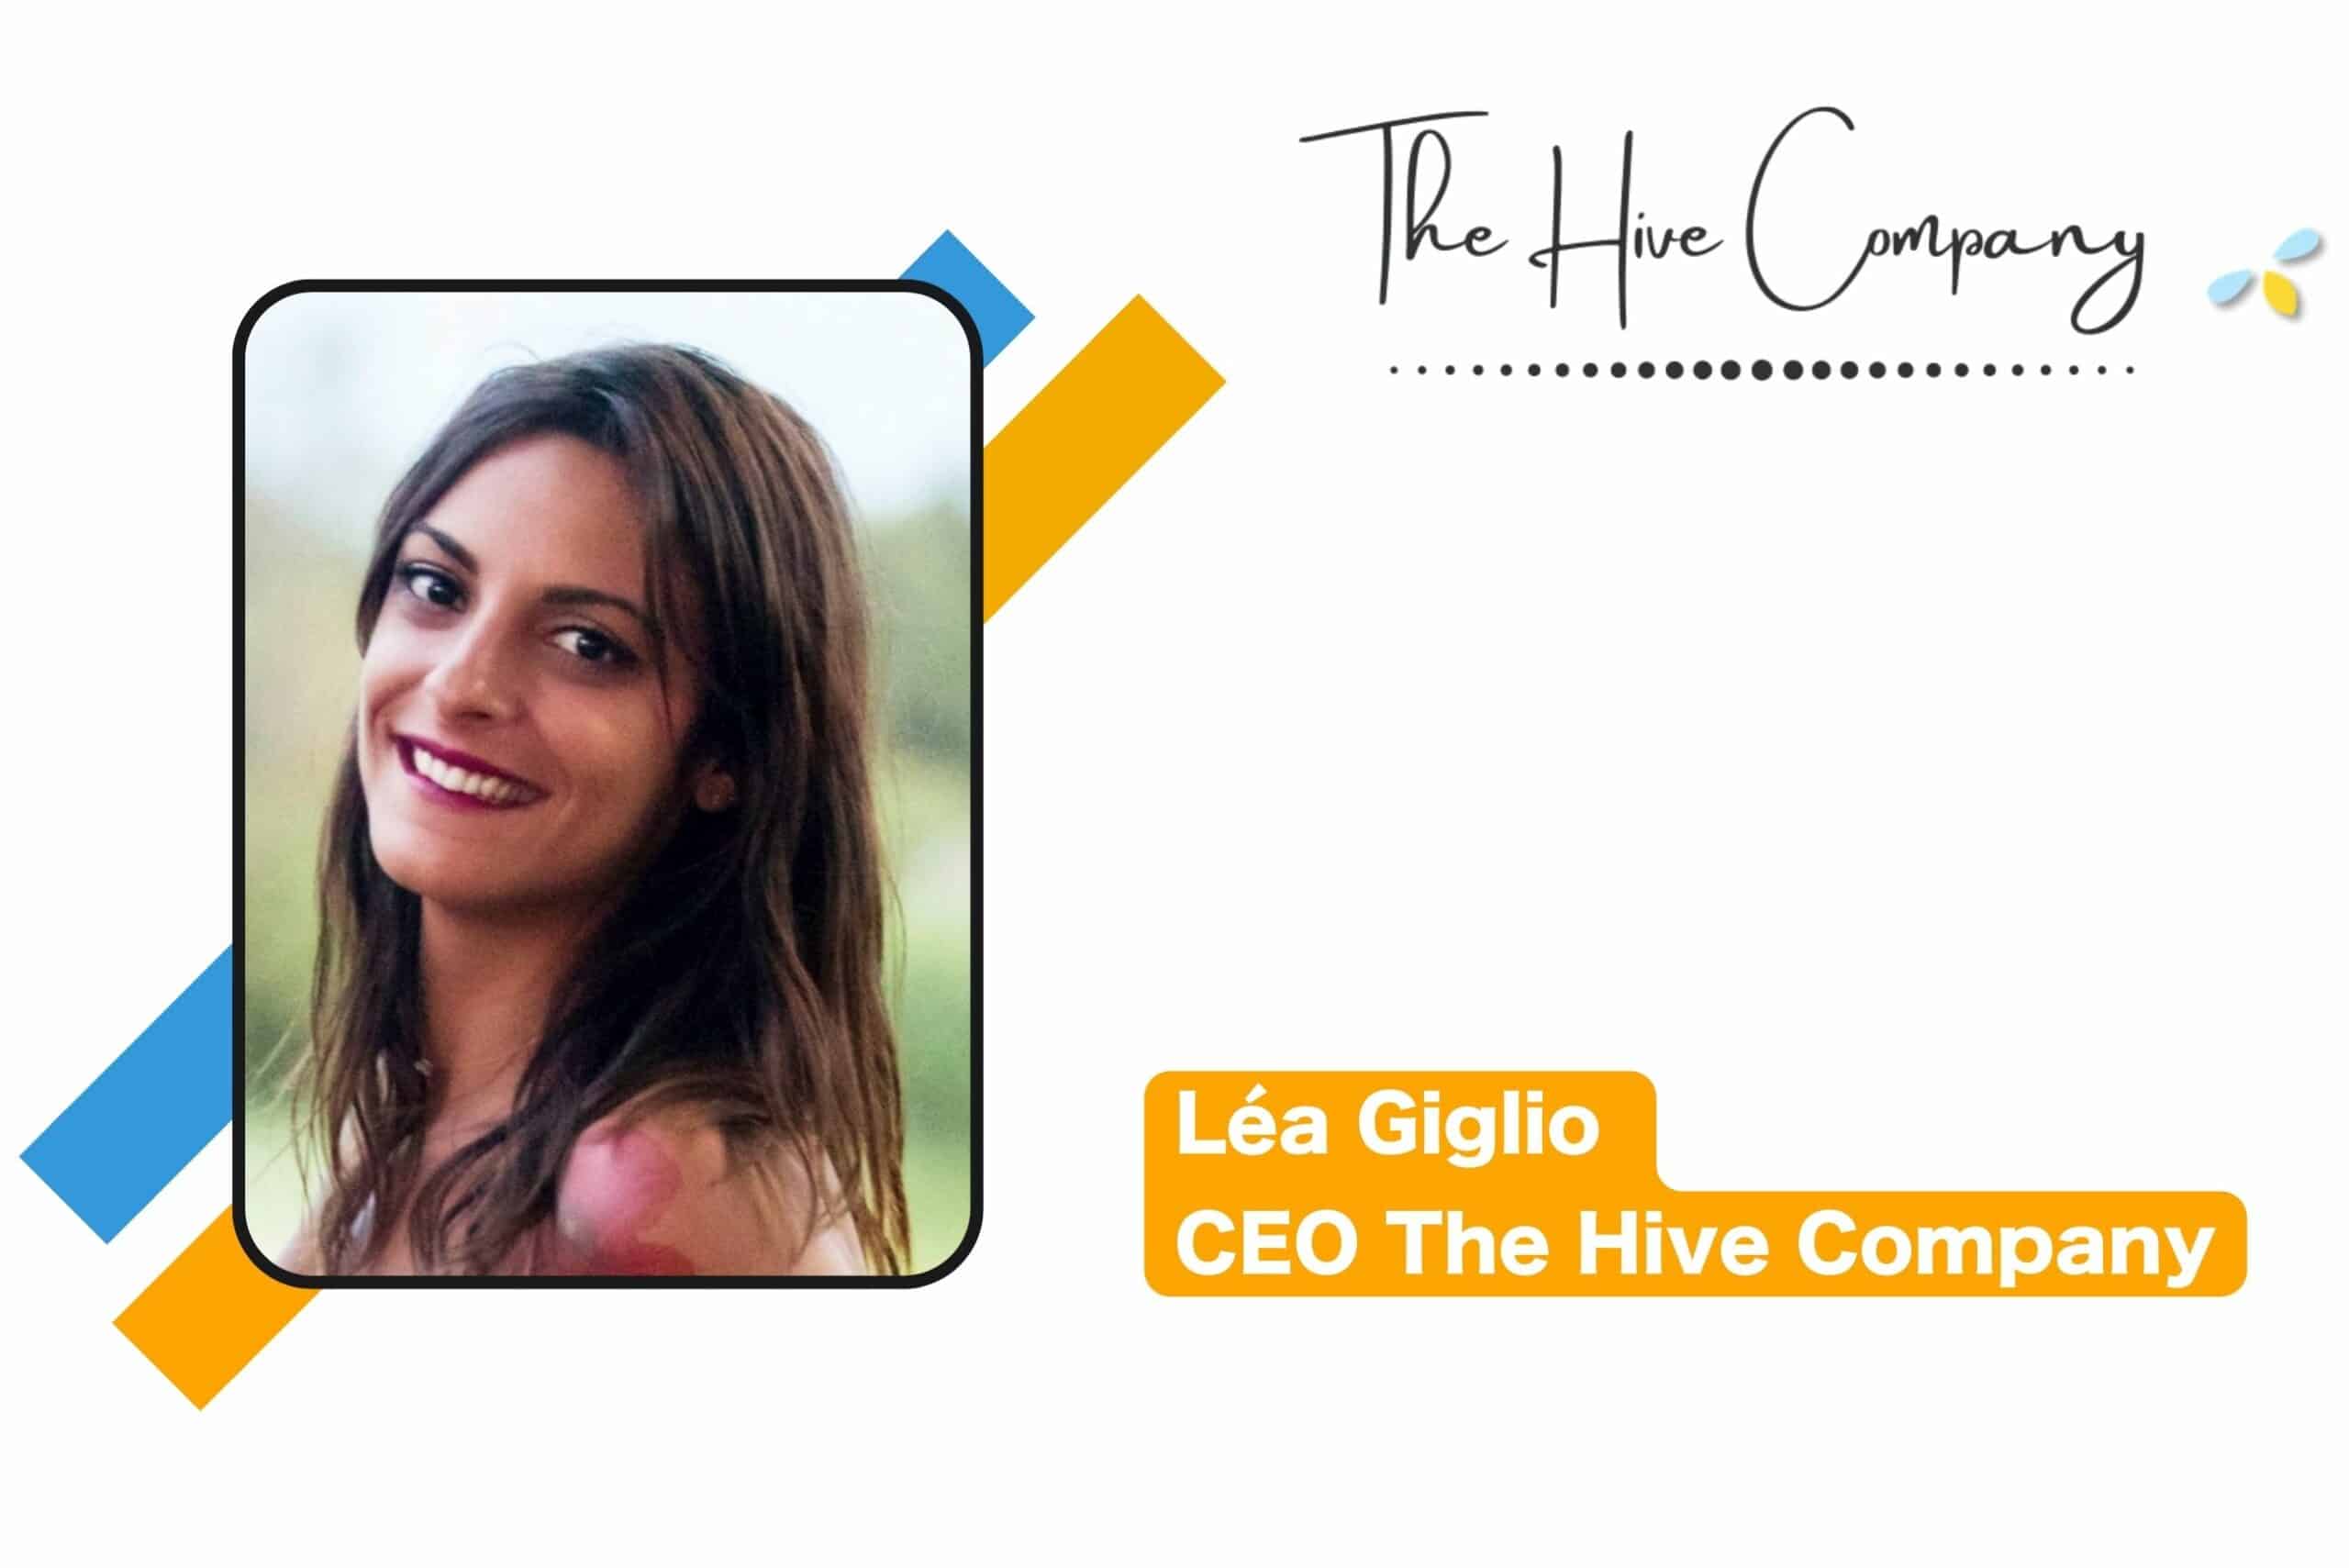 The Hive Company